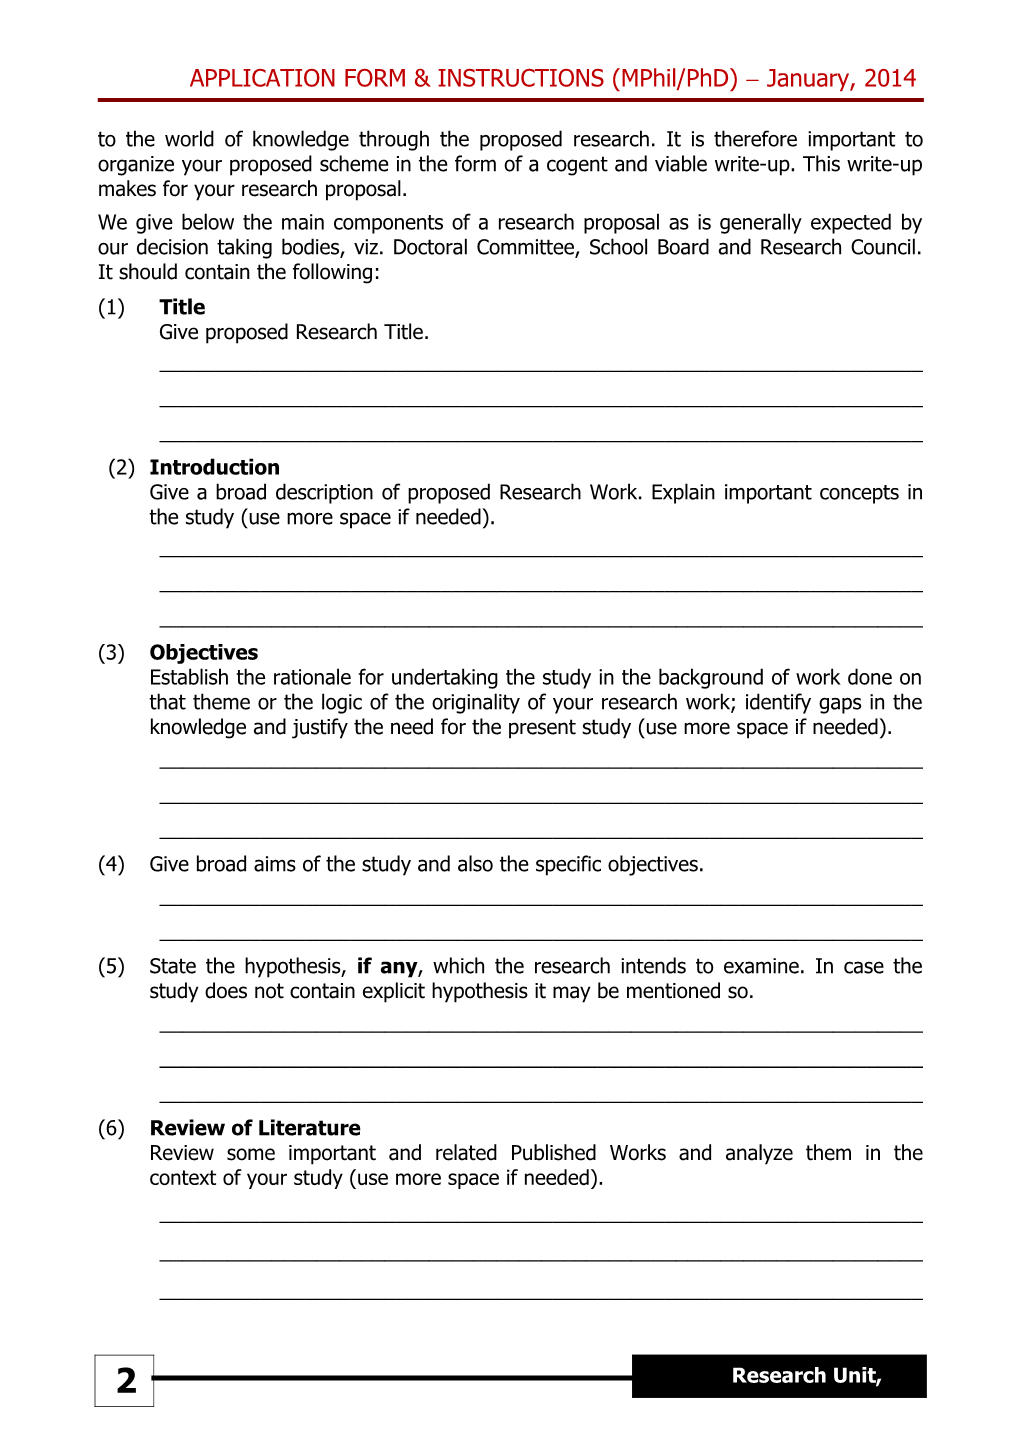 APPLICATION FORM & INSTRUCTIONS (Mphil/Phd)- January, 2014